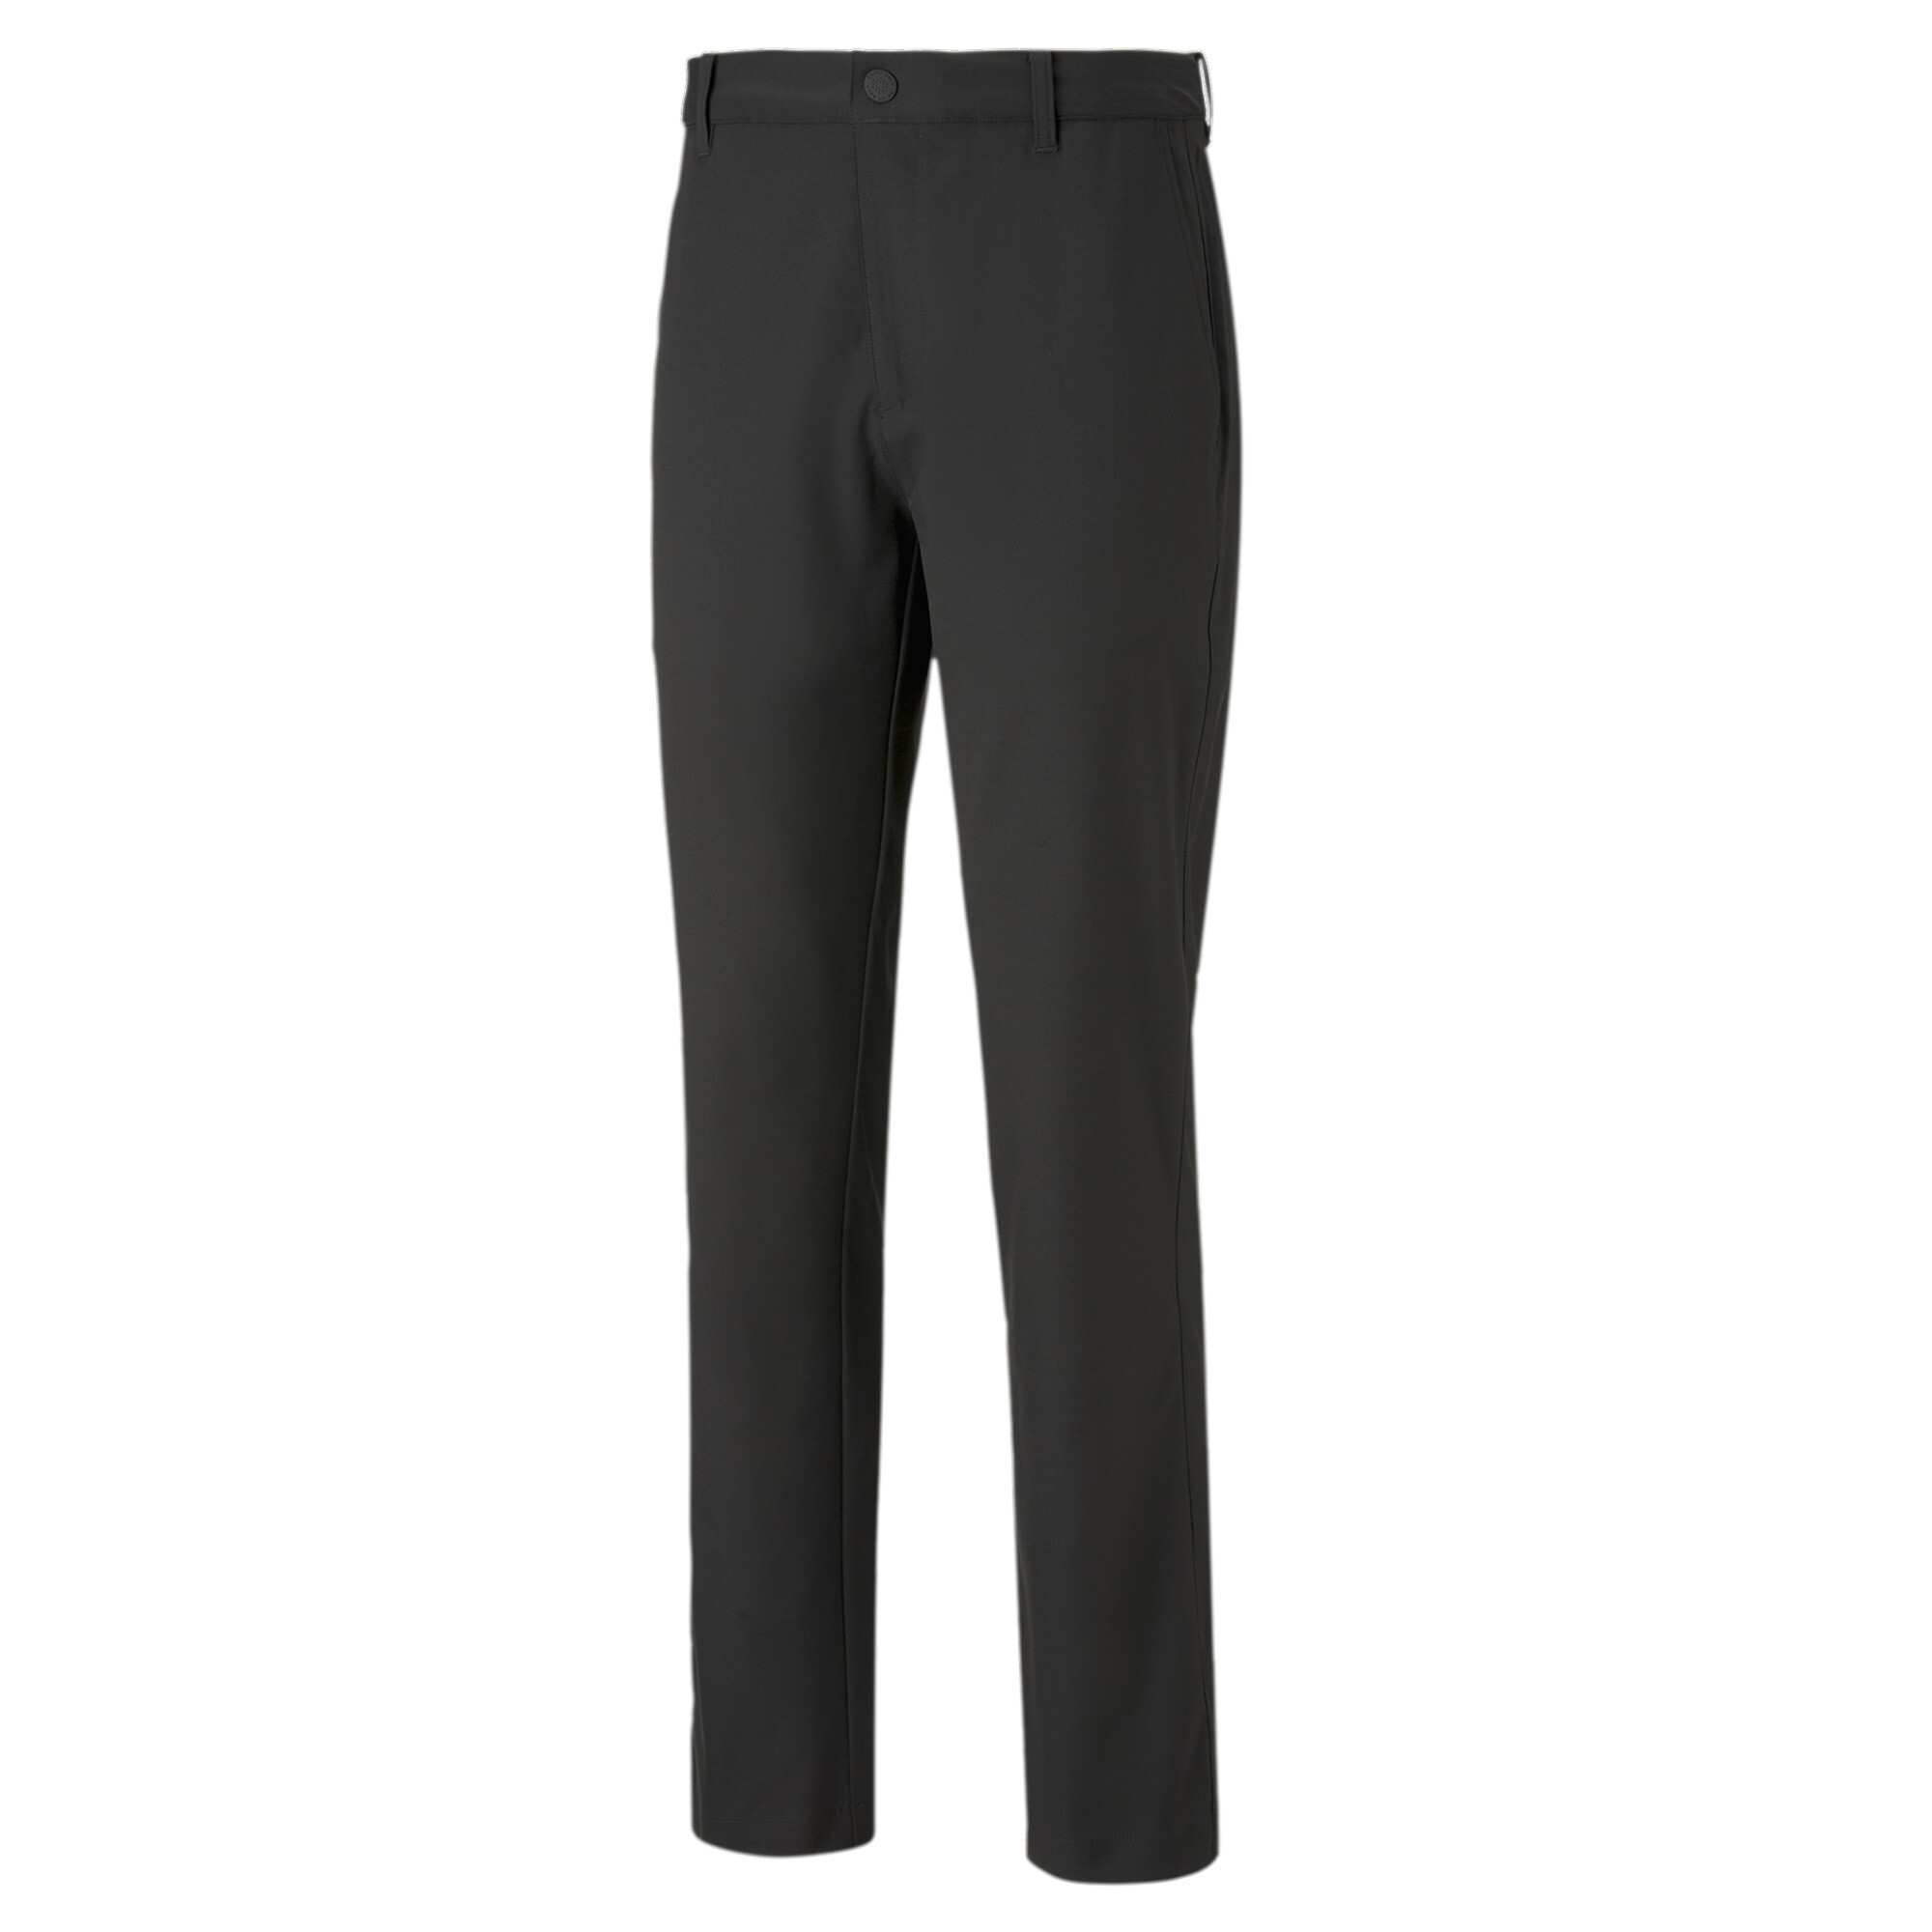 Men's Puma Dealer Golf Pants, Black, Size 34/32, Clothing